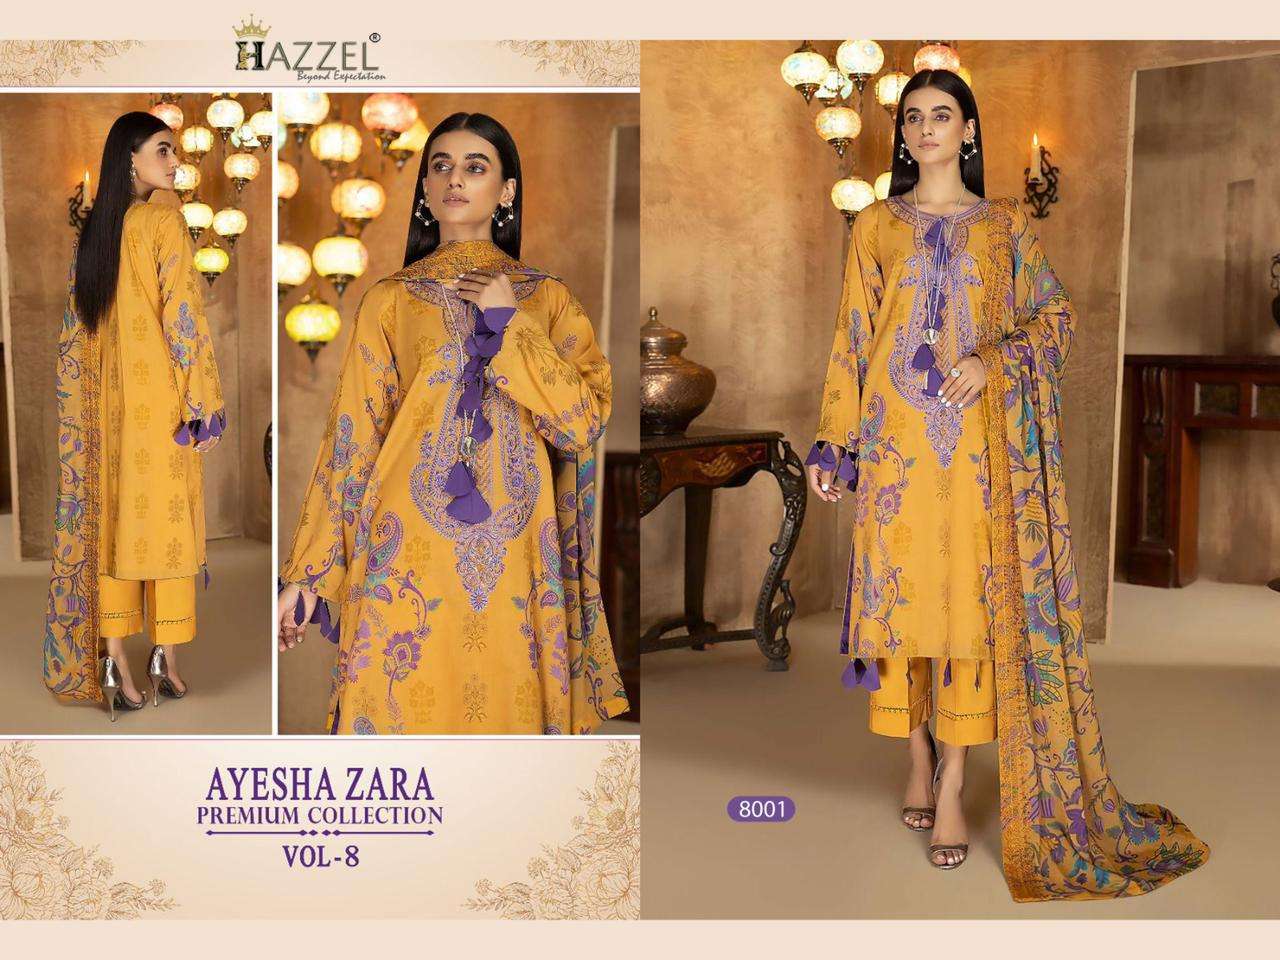 hazzel ayesha zara premium collections vol-8 8001-8002 series latest pakistani salwar kameez wholesaler surat gujarat